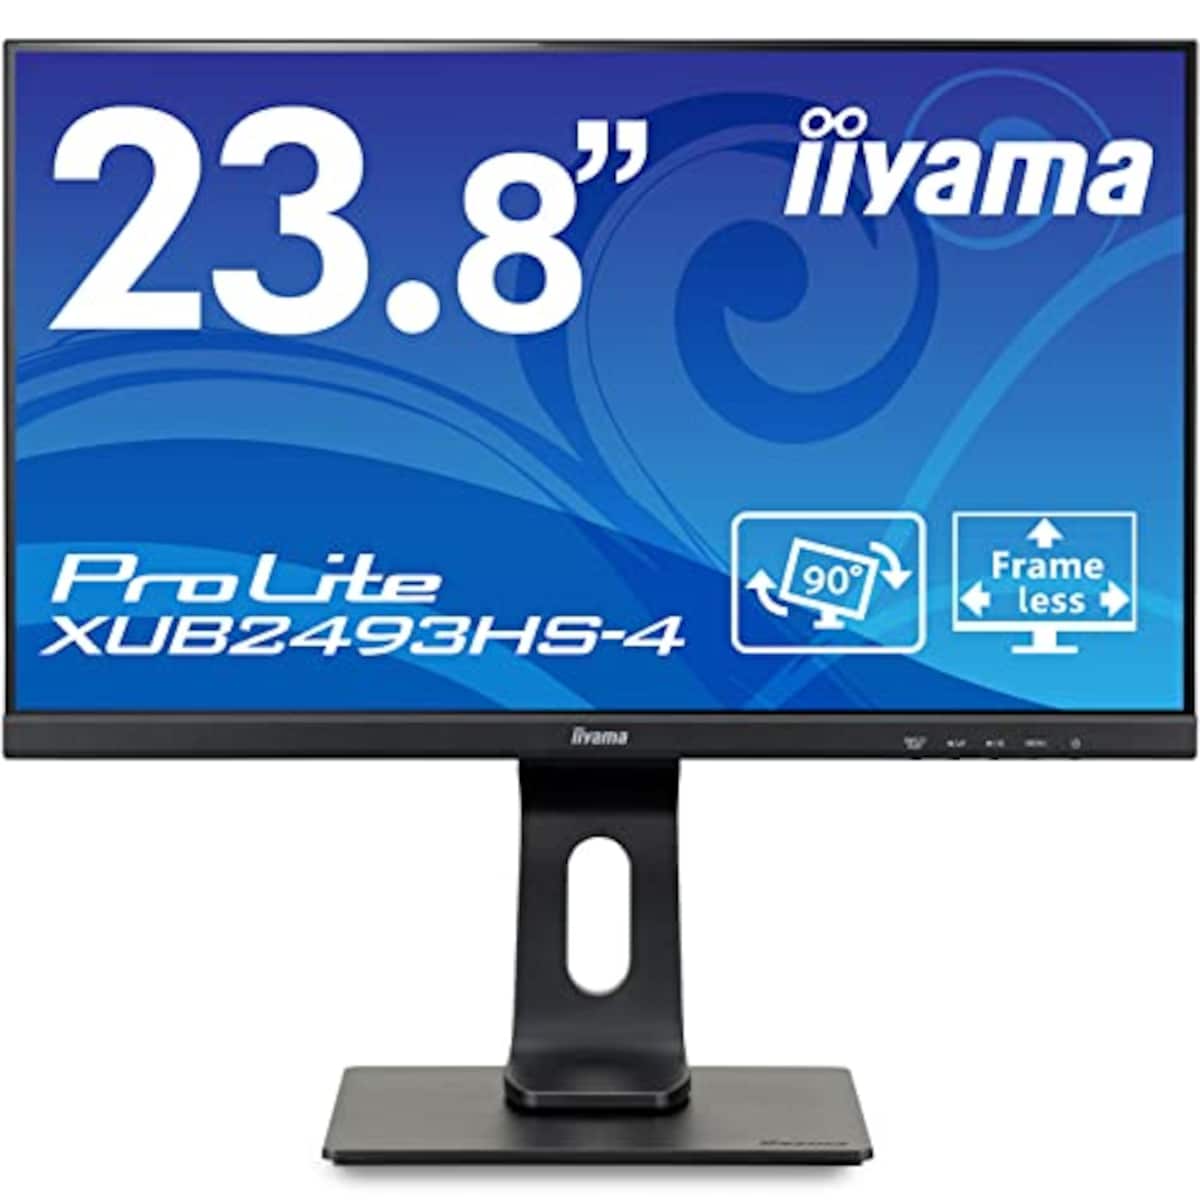 iiyama モニター ディスプレイ 23.8インチ フルHD IPS方式 高さ調整 DisplayPort HDMI D-Sub 全ケーブル付 3年保証 国内サポート XUB2493HS-B4